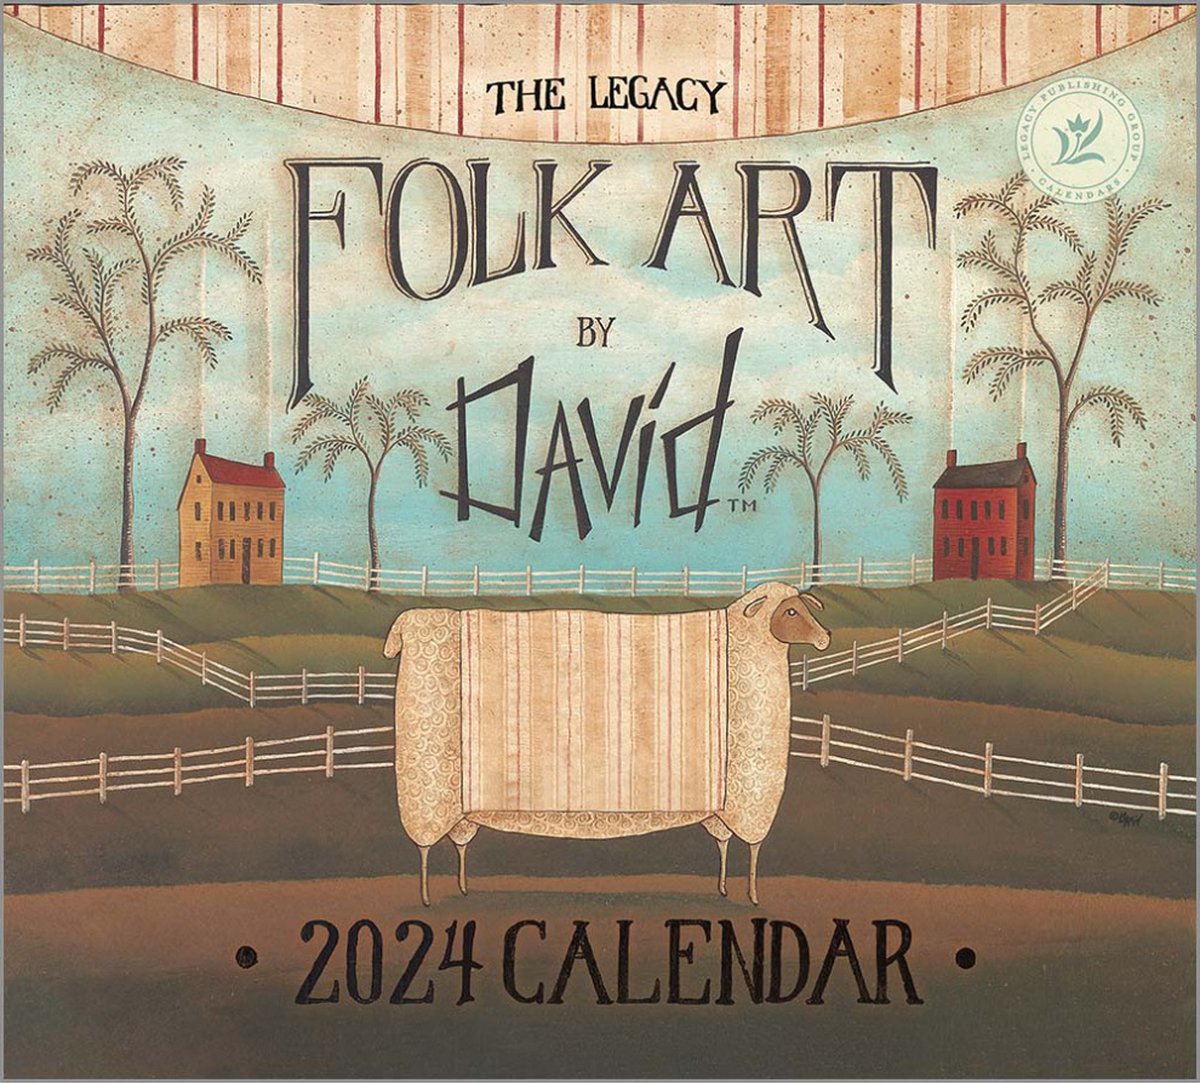 Folk Art by David Kalender 2024